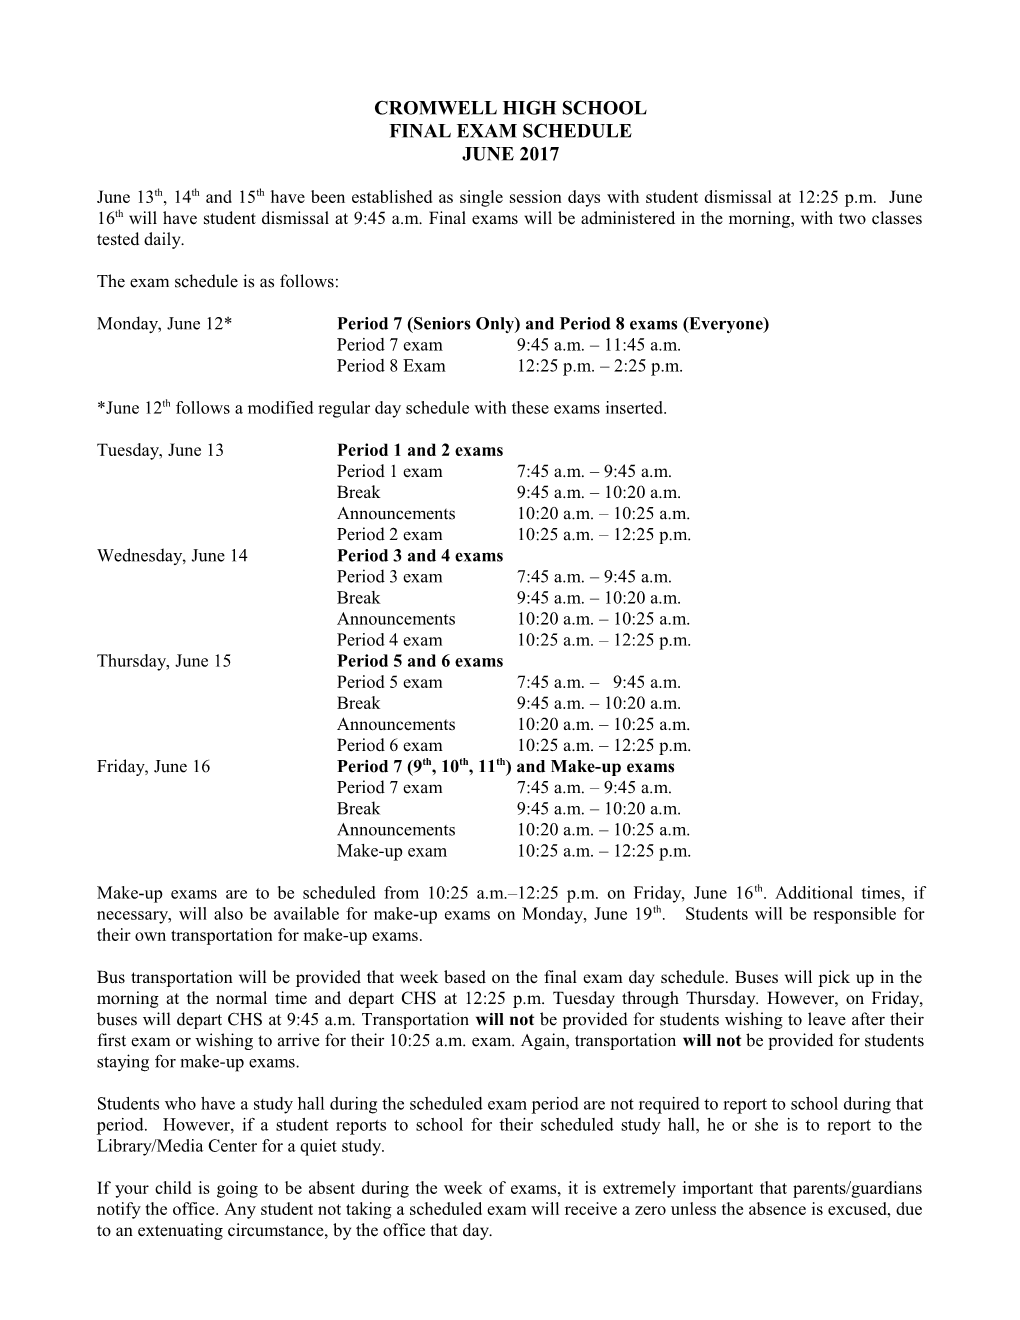 Final Exam Schedule January, 2005